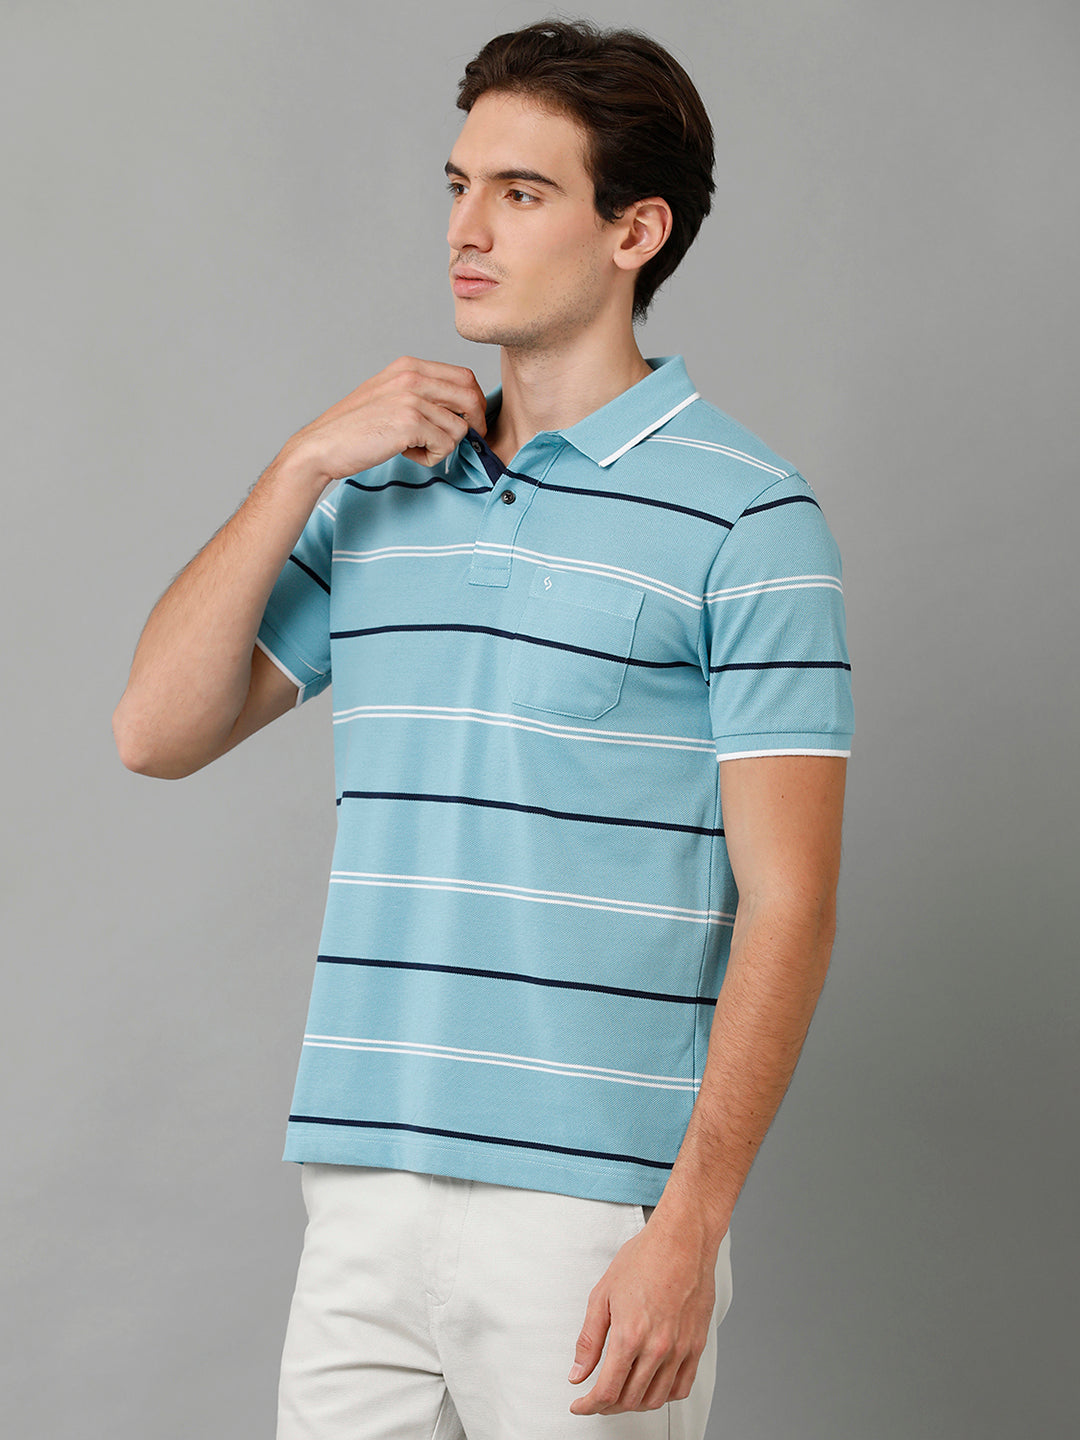 Classic Polo Men's Cotton Blend Striped Half Sleeve Slim Fit Polo Neck Blue Color T-Shirt | Adore - 196 B